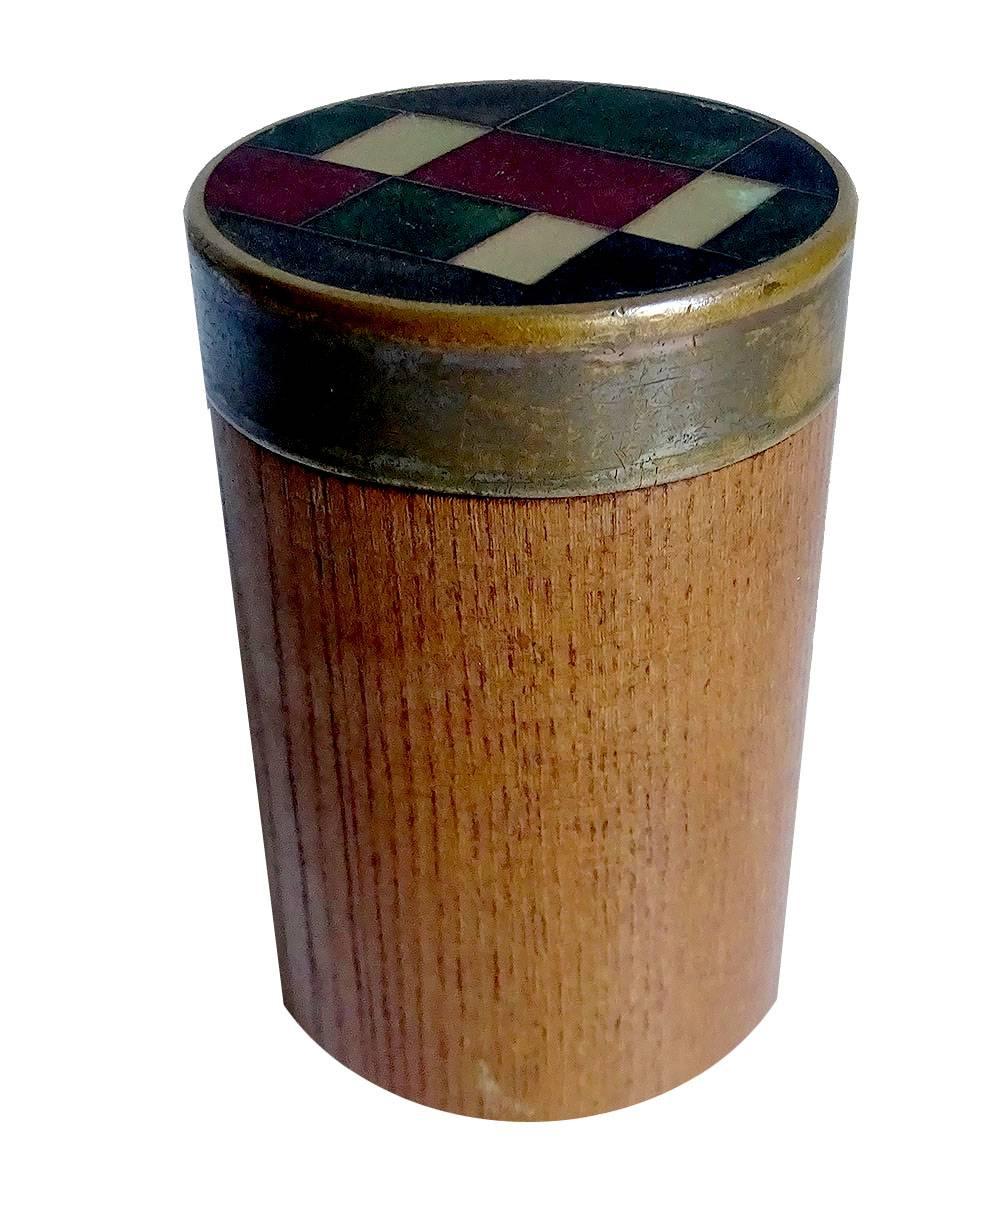 Teak box with cloisonne enameled copper lid, once designed as cigarette container, modernist pattern on lid, manufactured by  Scholz & Lammel Schwaebisch Gmund /Germany 1960

